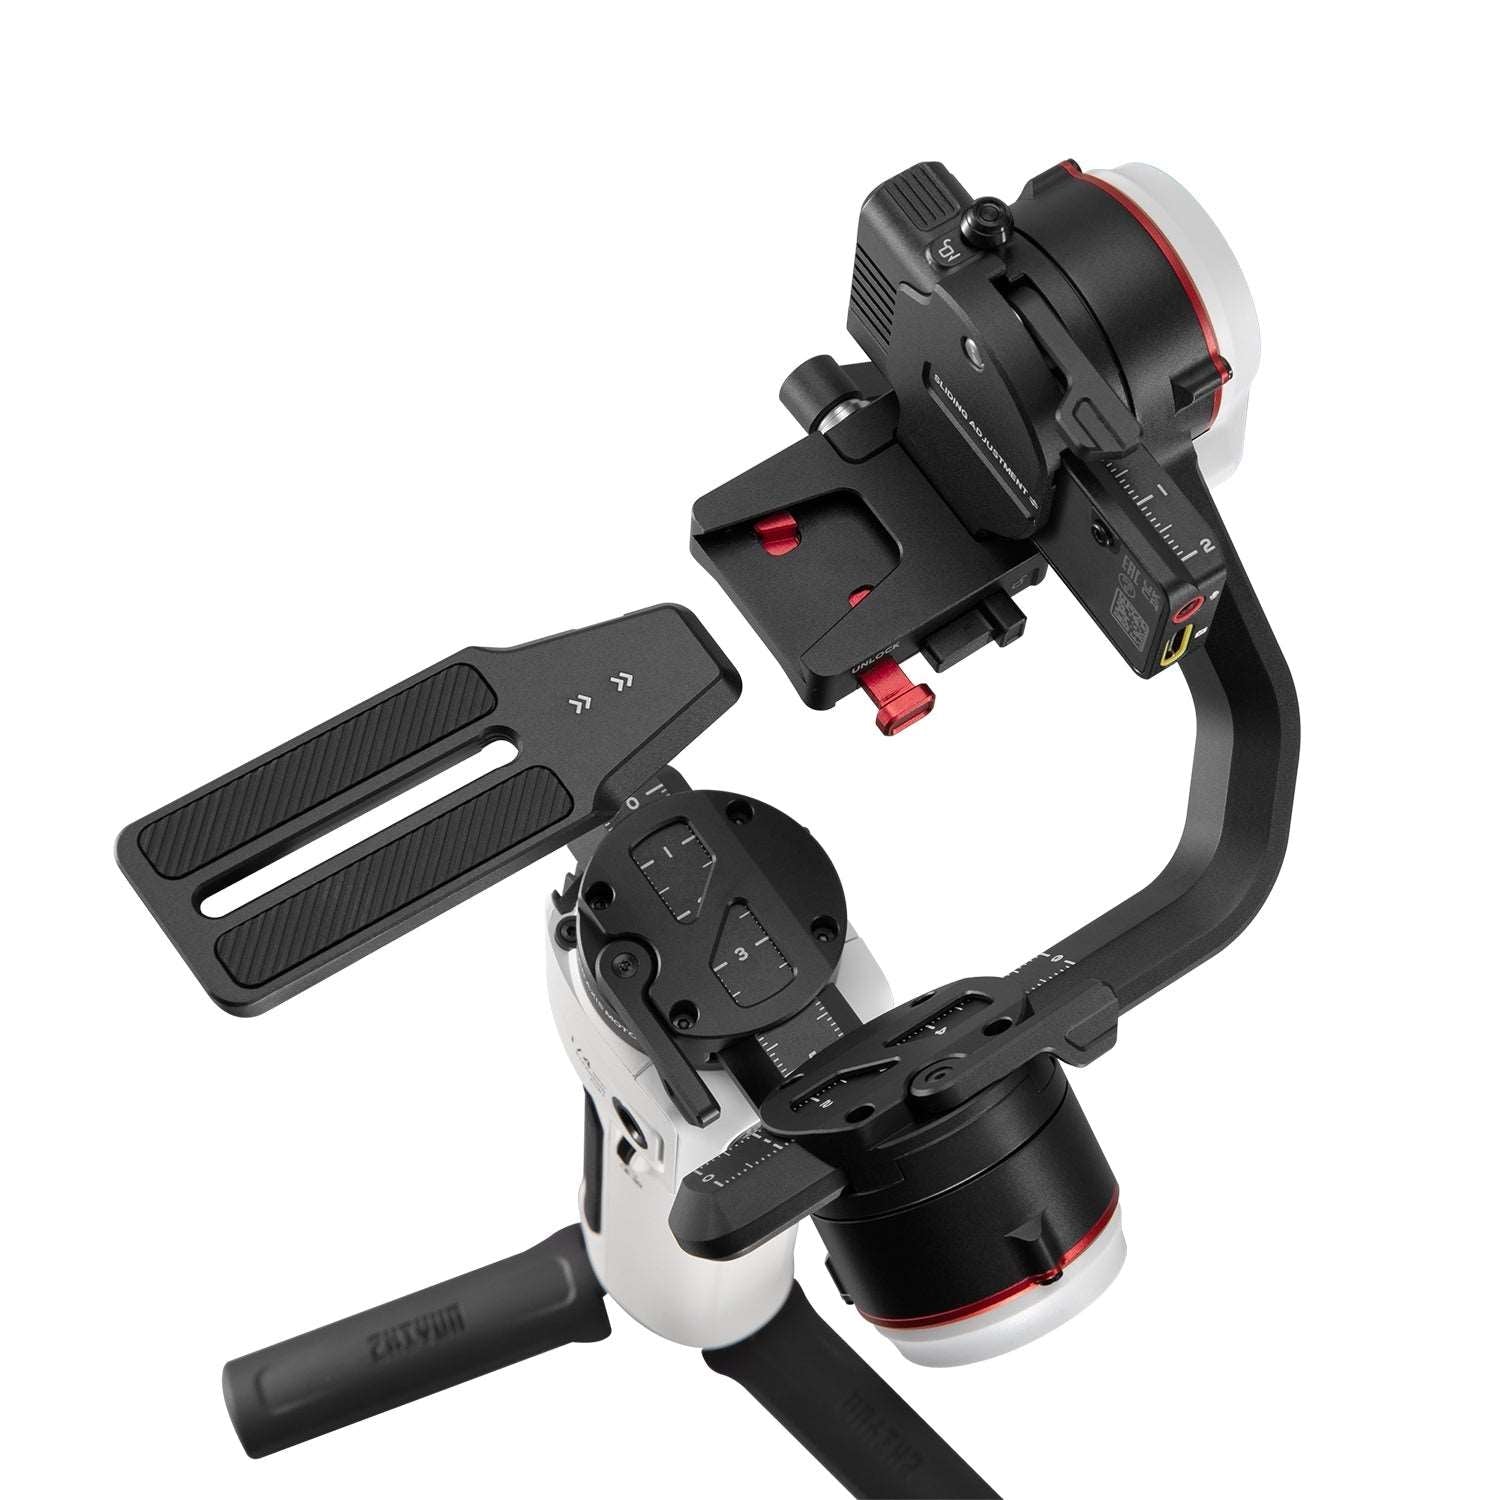 Crane M3 Camera Gimbal for Vlogging | ZHIYUN Store